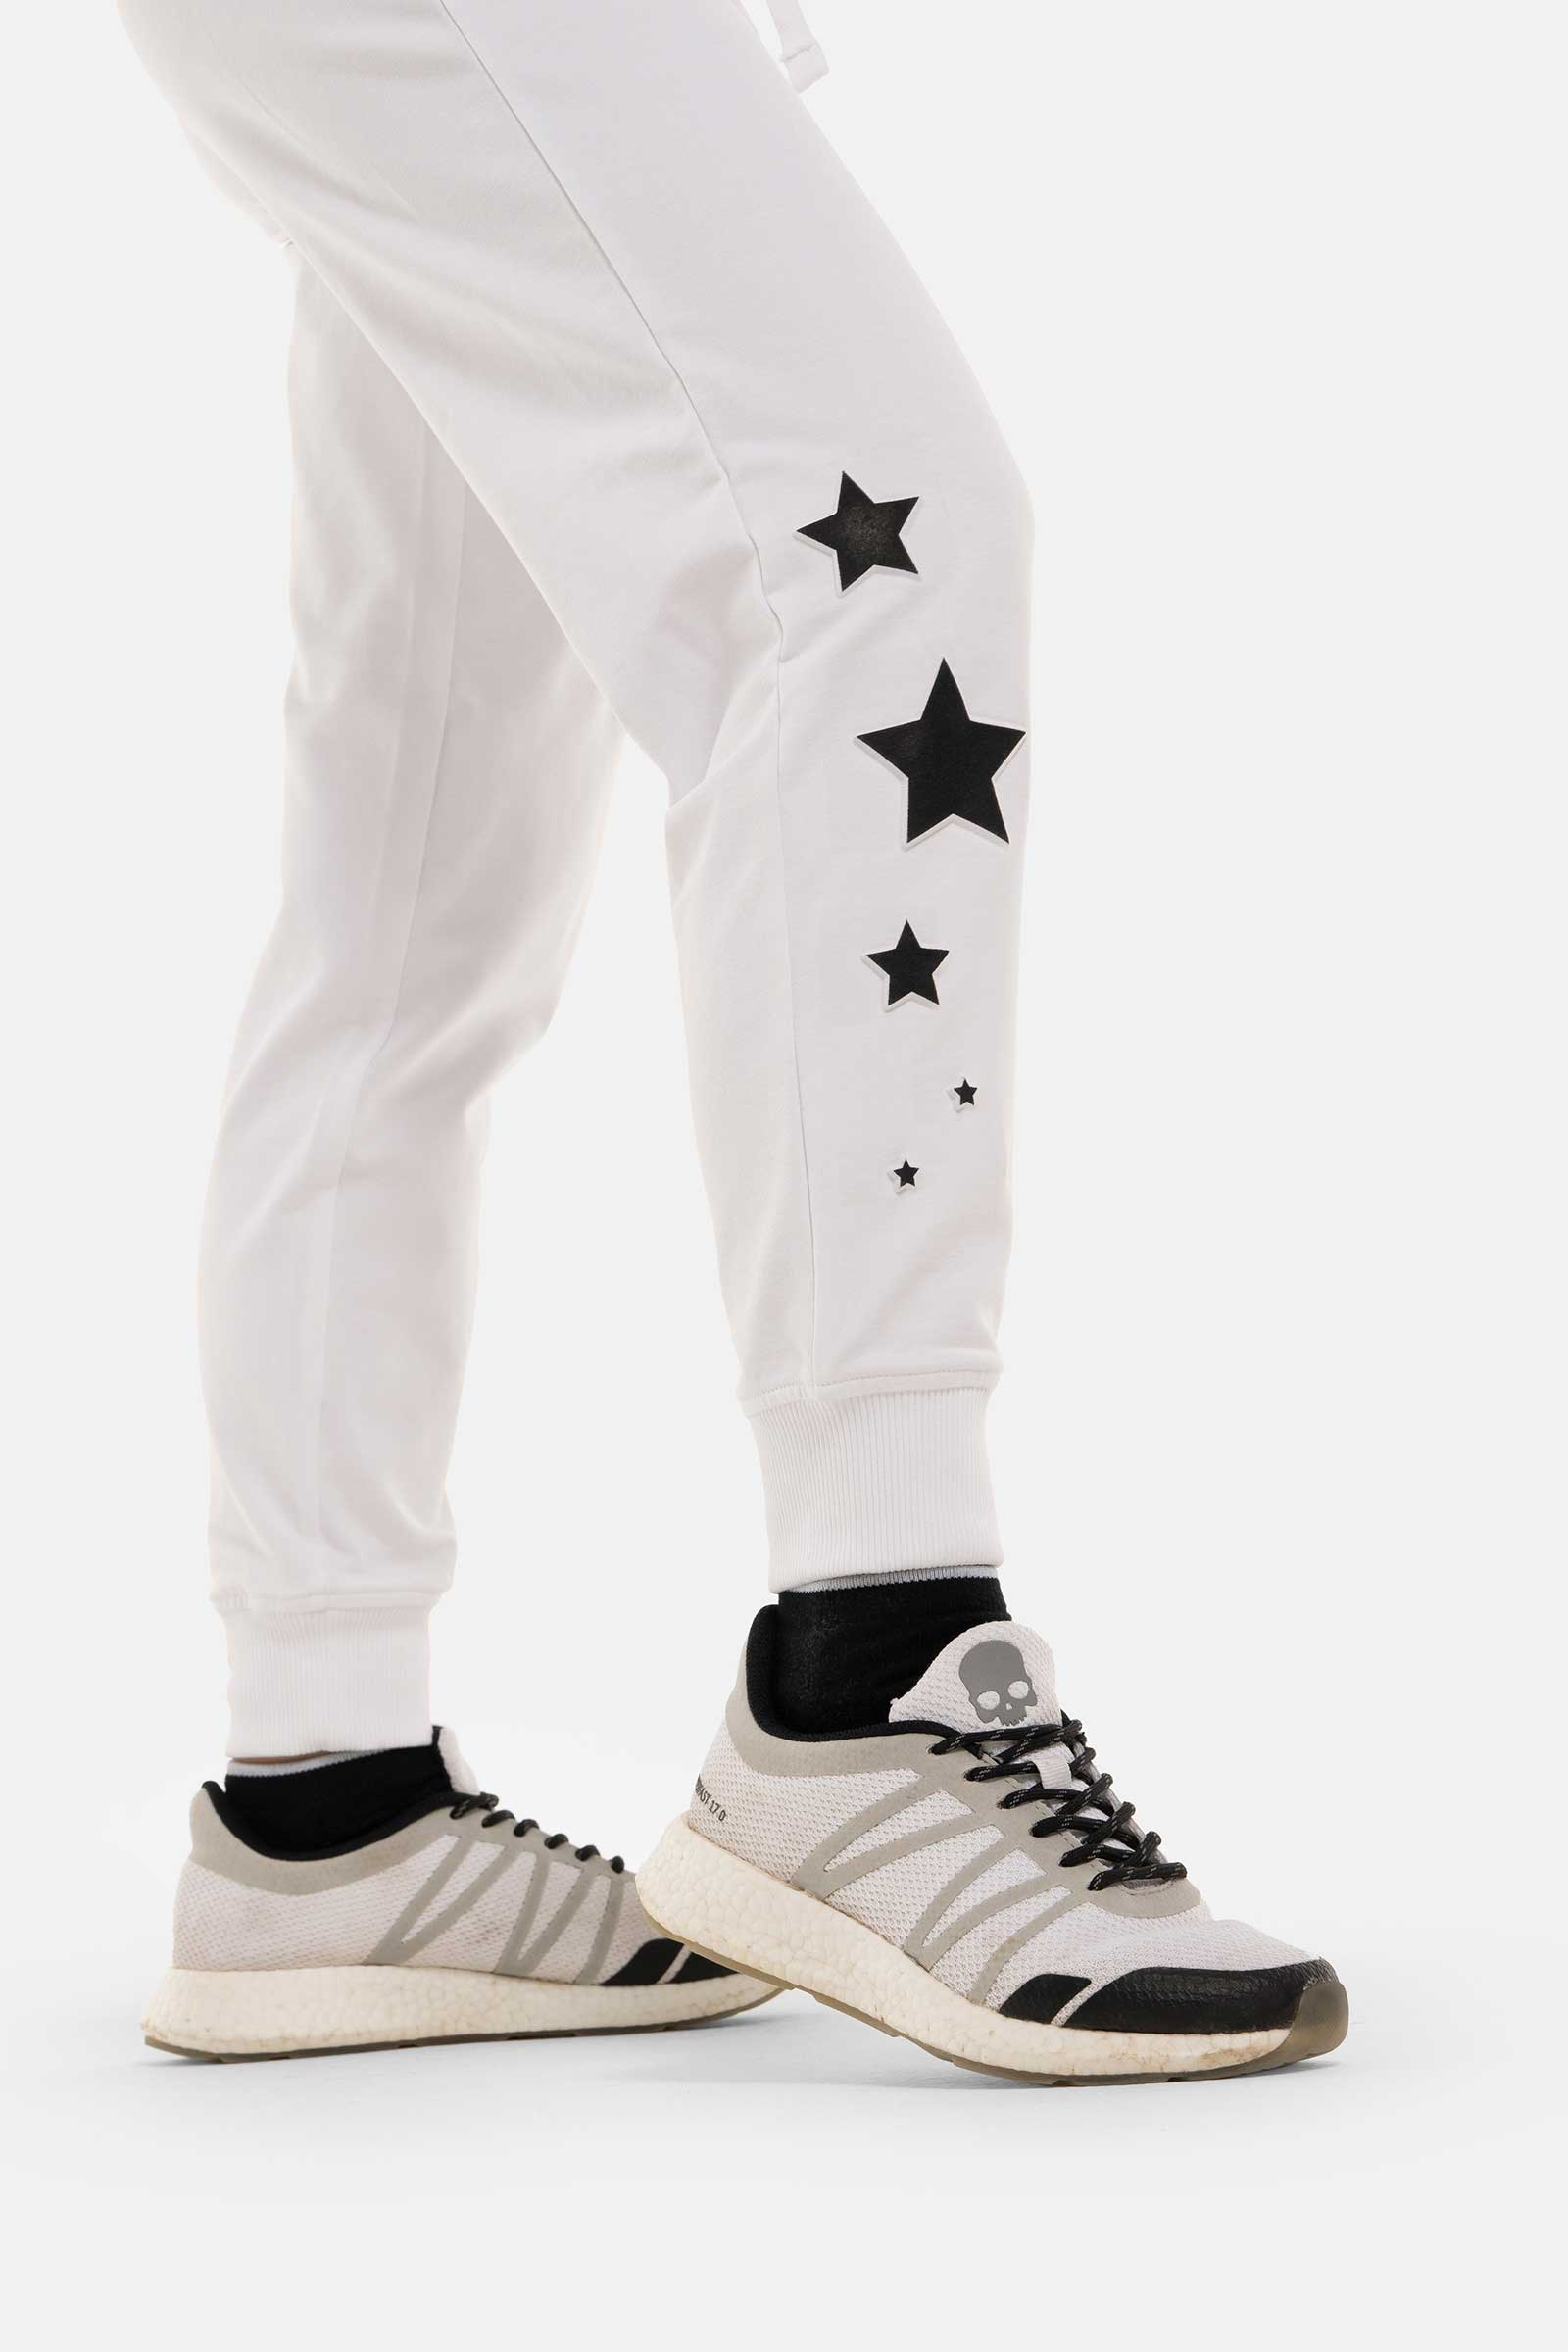 PANTALONI STARS - WHITE - Abbigliamento sportivo | Hydrogen